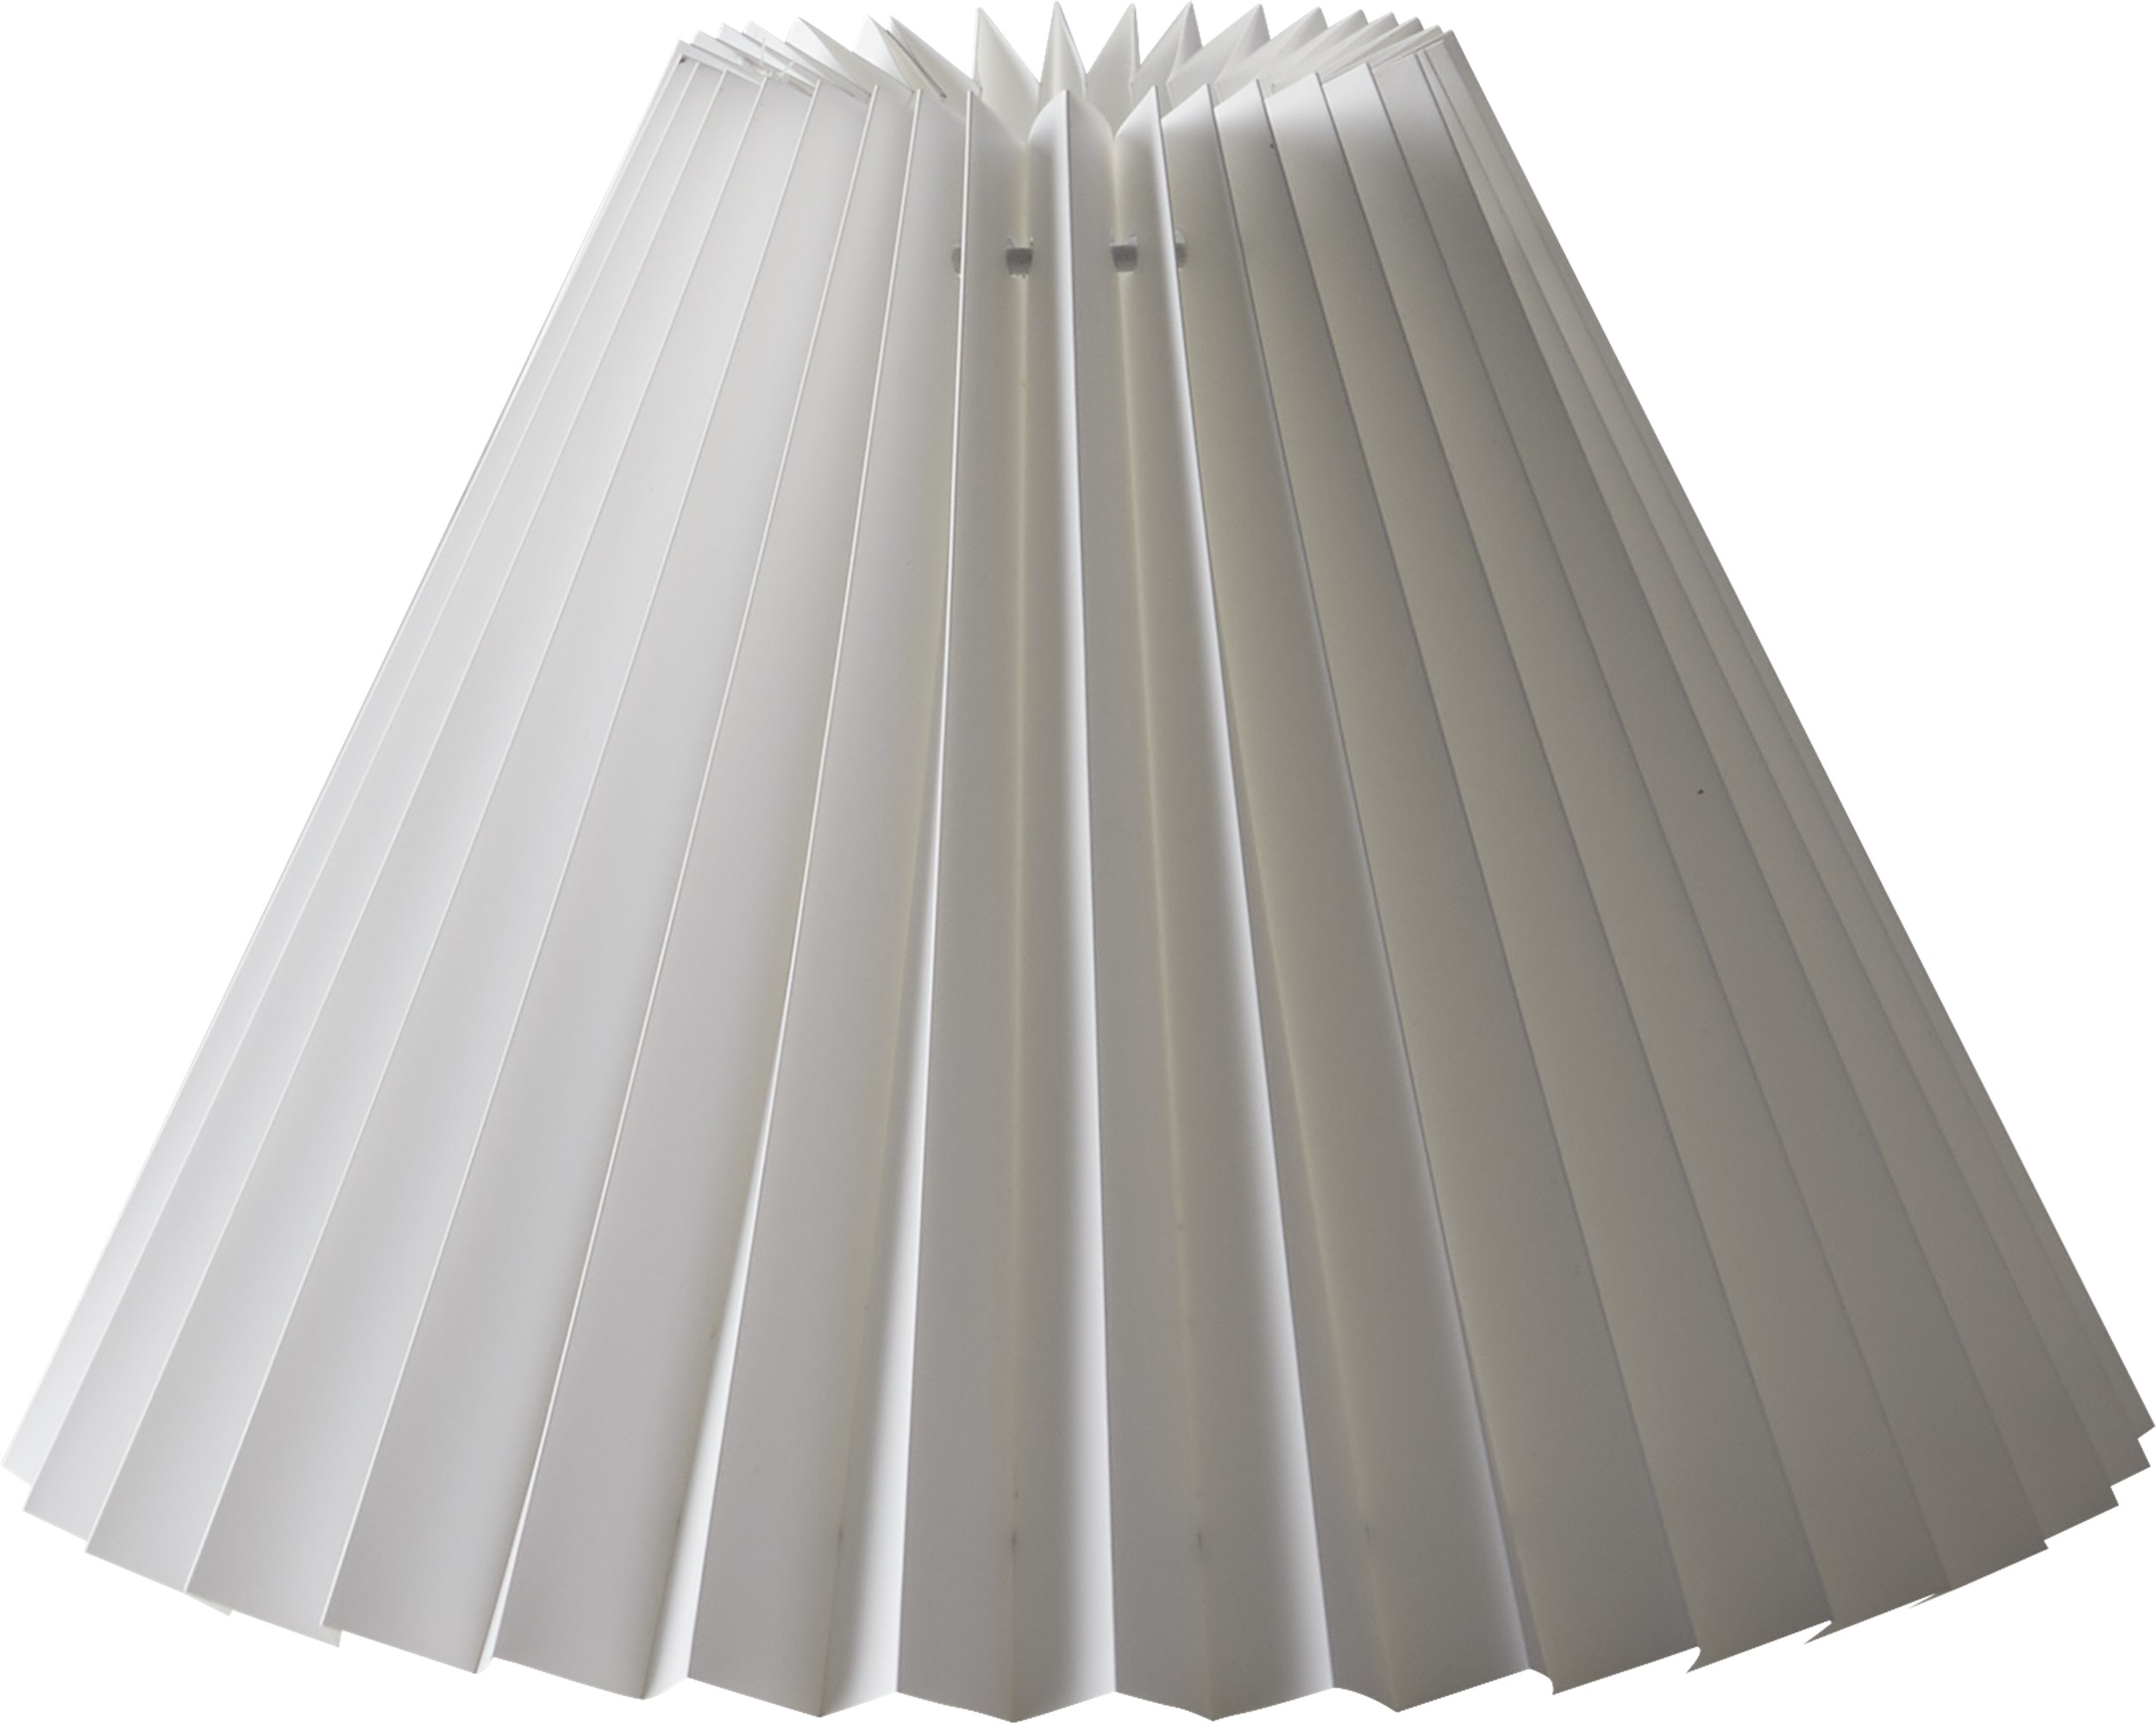 Solo Lampskärm 17 x 26,5 cm - Vitt tyg plisséskärm och innerskärm i vit folie